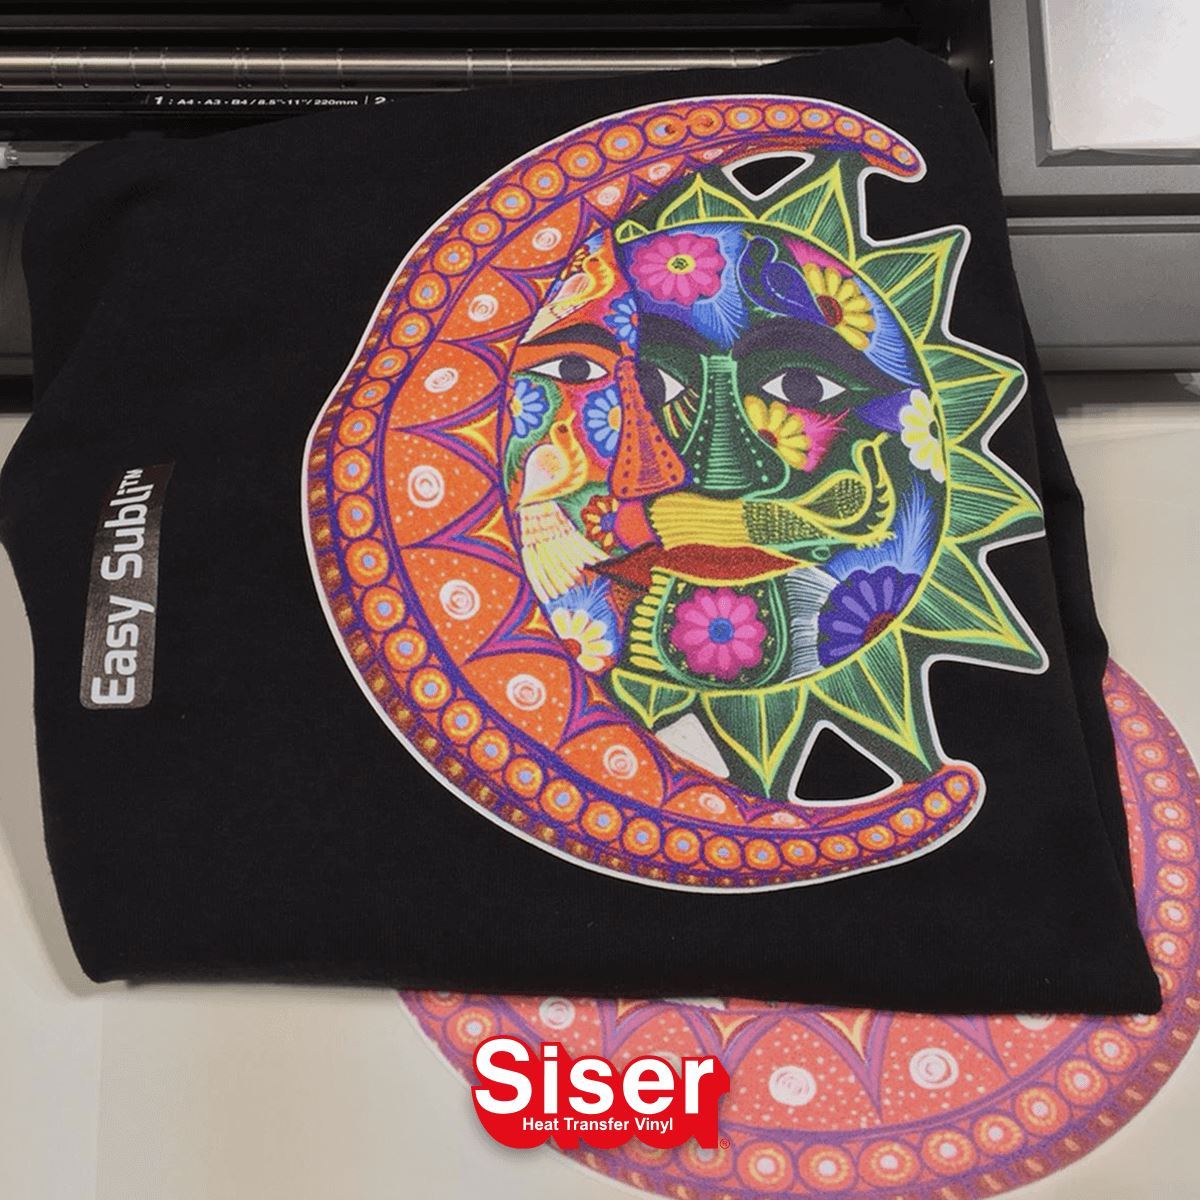  Siser EasySubli HTV 20x5ft Roll - Sublimation Heat Transfer  Vinyl for T-Shirts : Arts, Crafts & Sewing